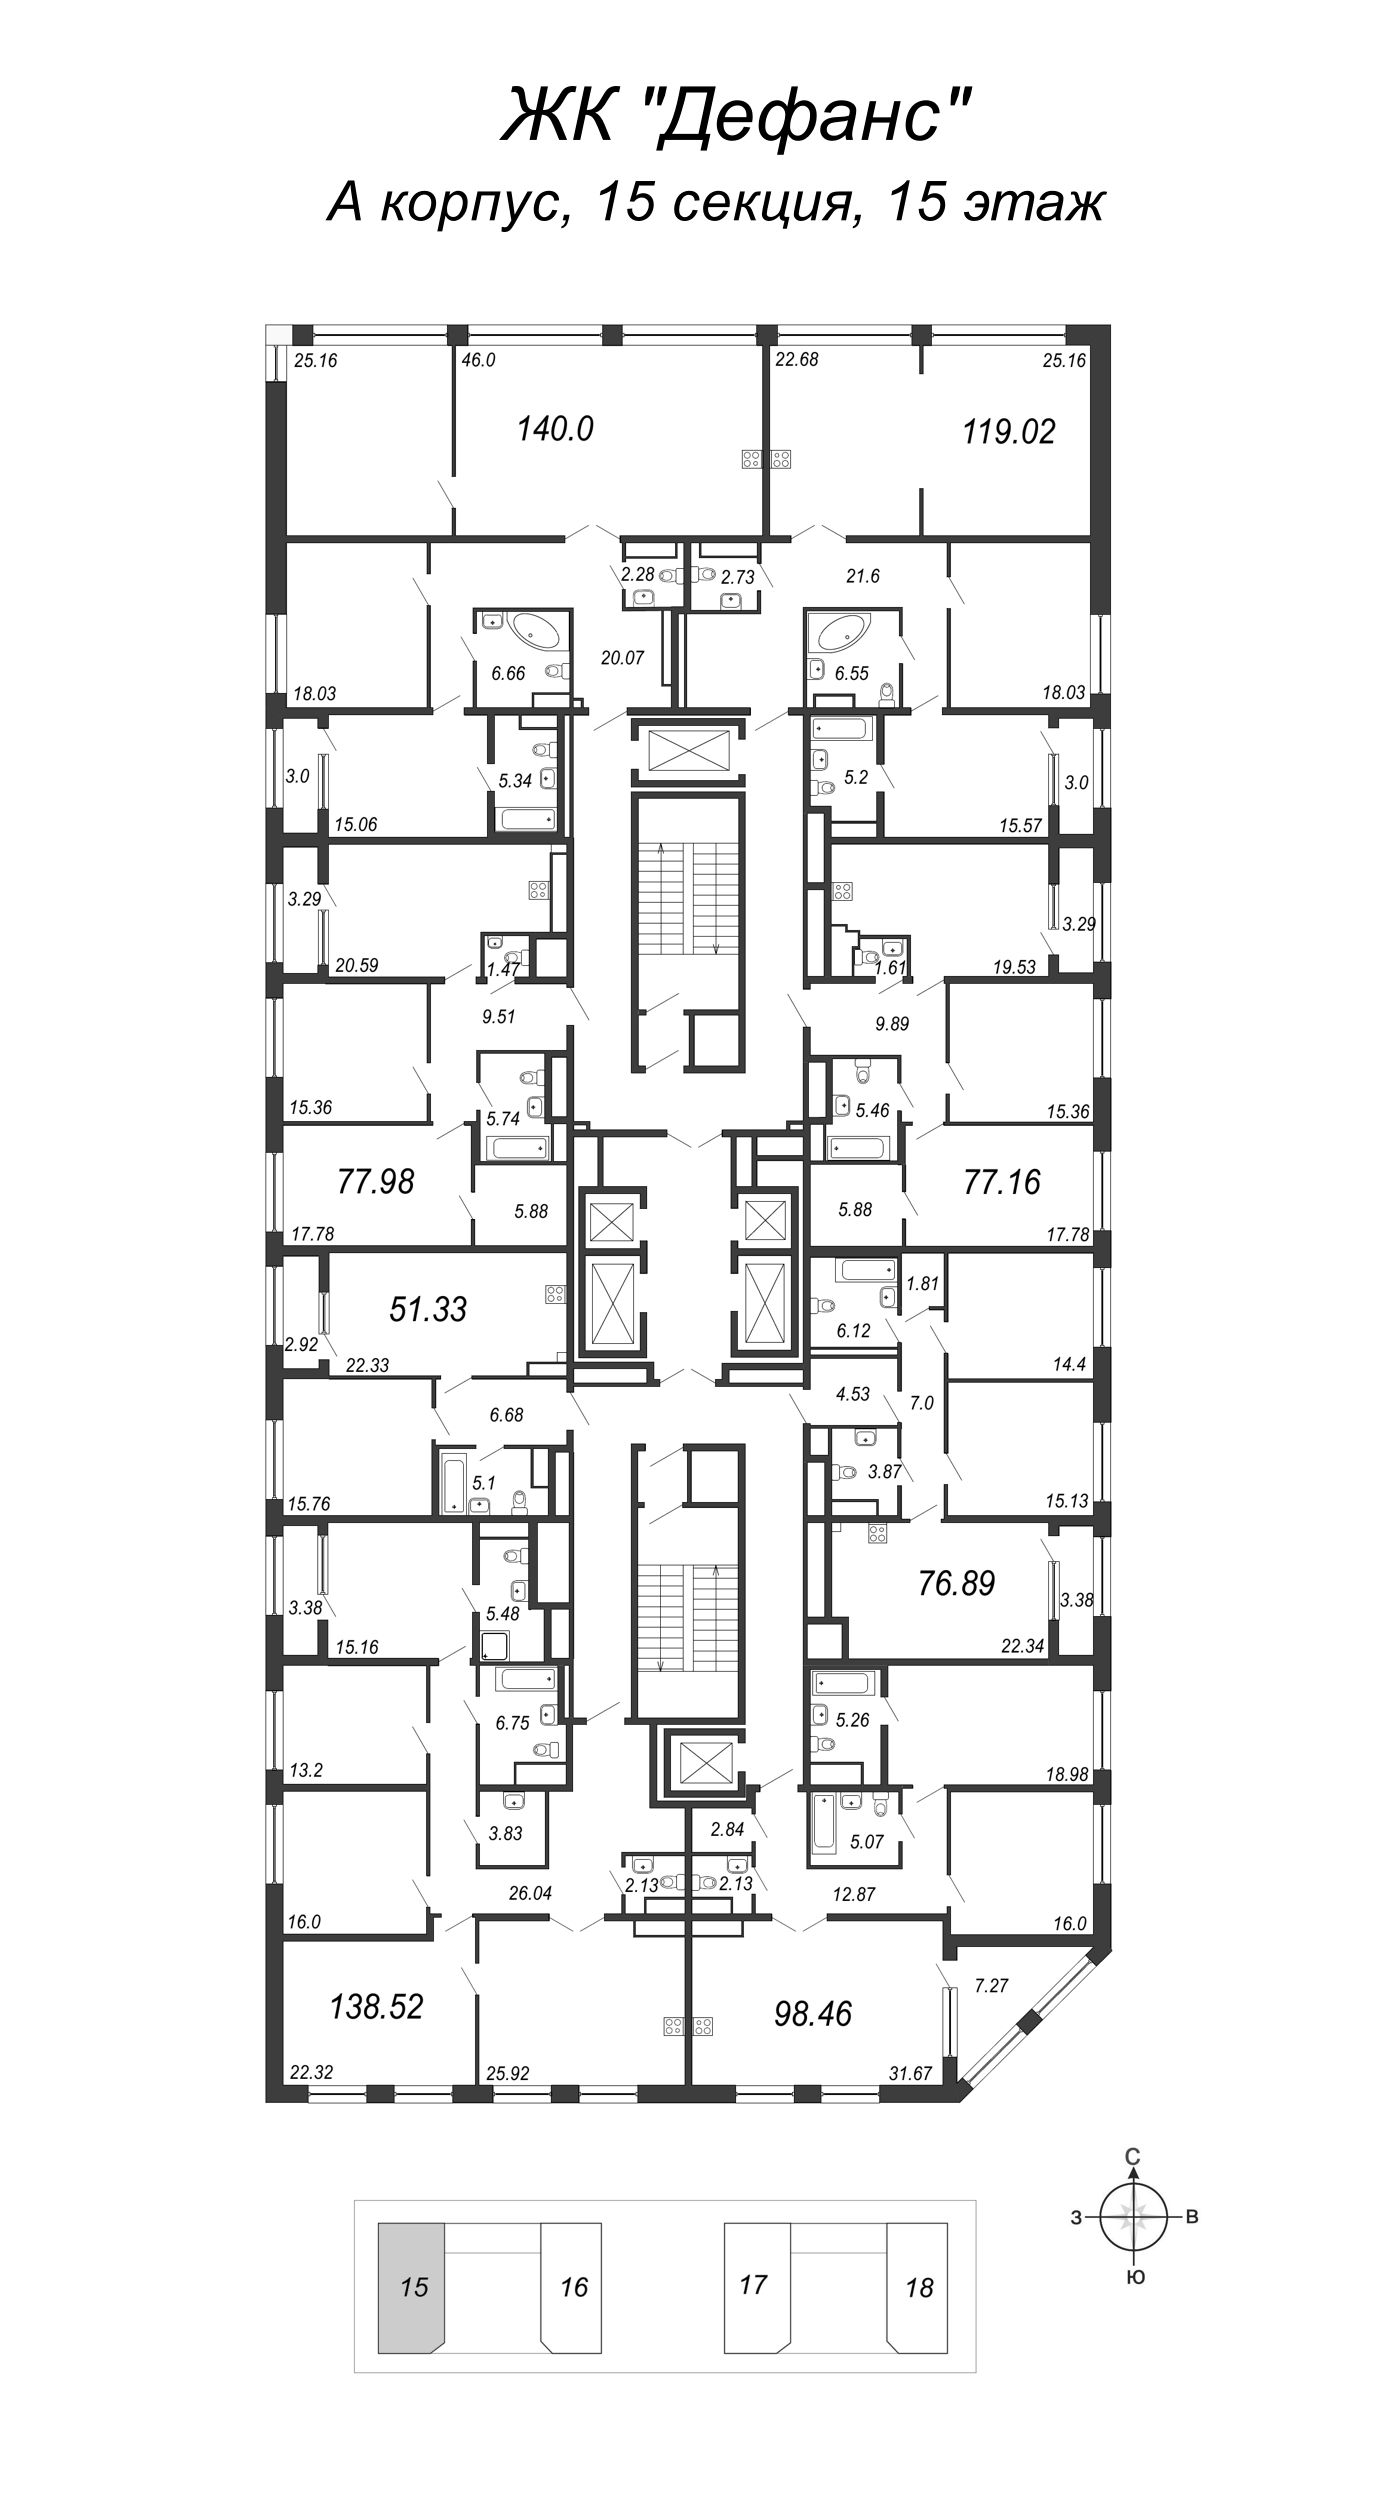 3-комнатная (Евро) квартира, 77.16 м² - планировка этажа